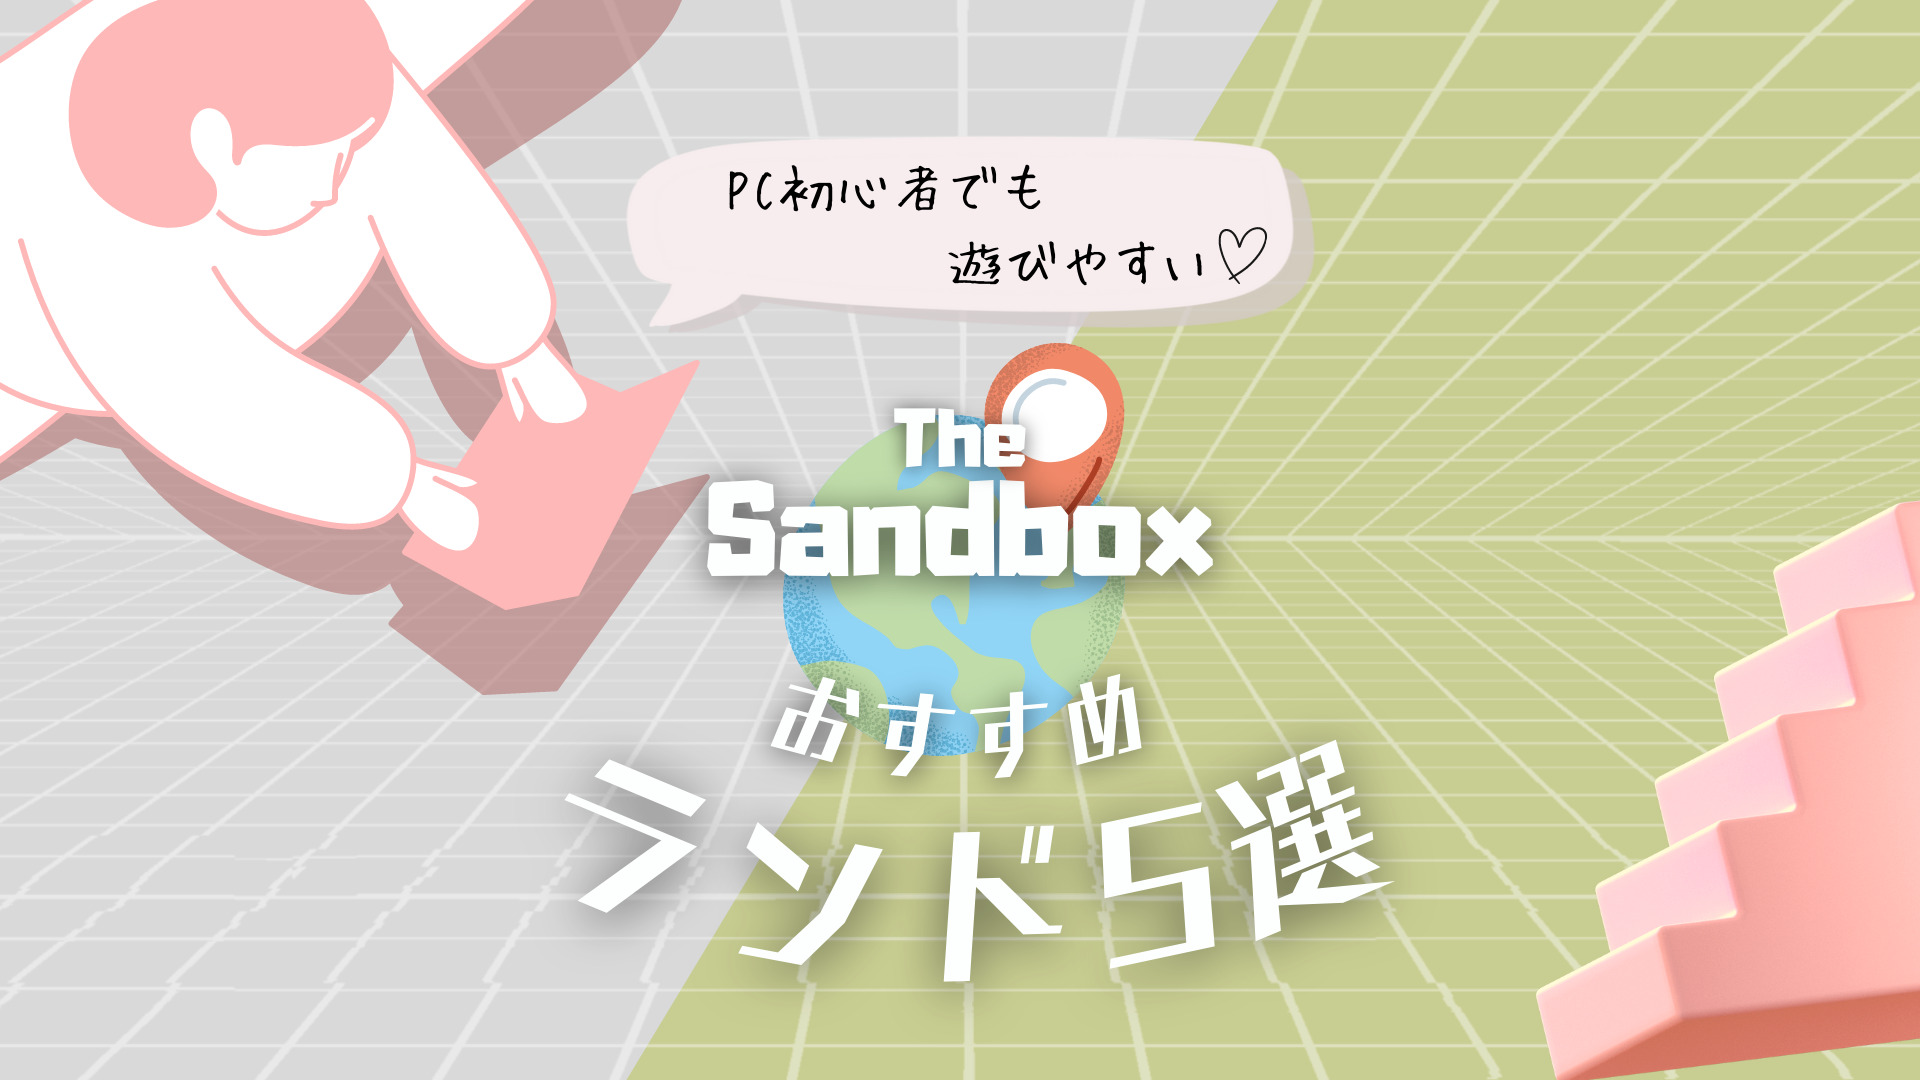 The Sandbox Land